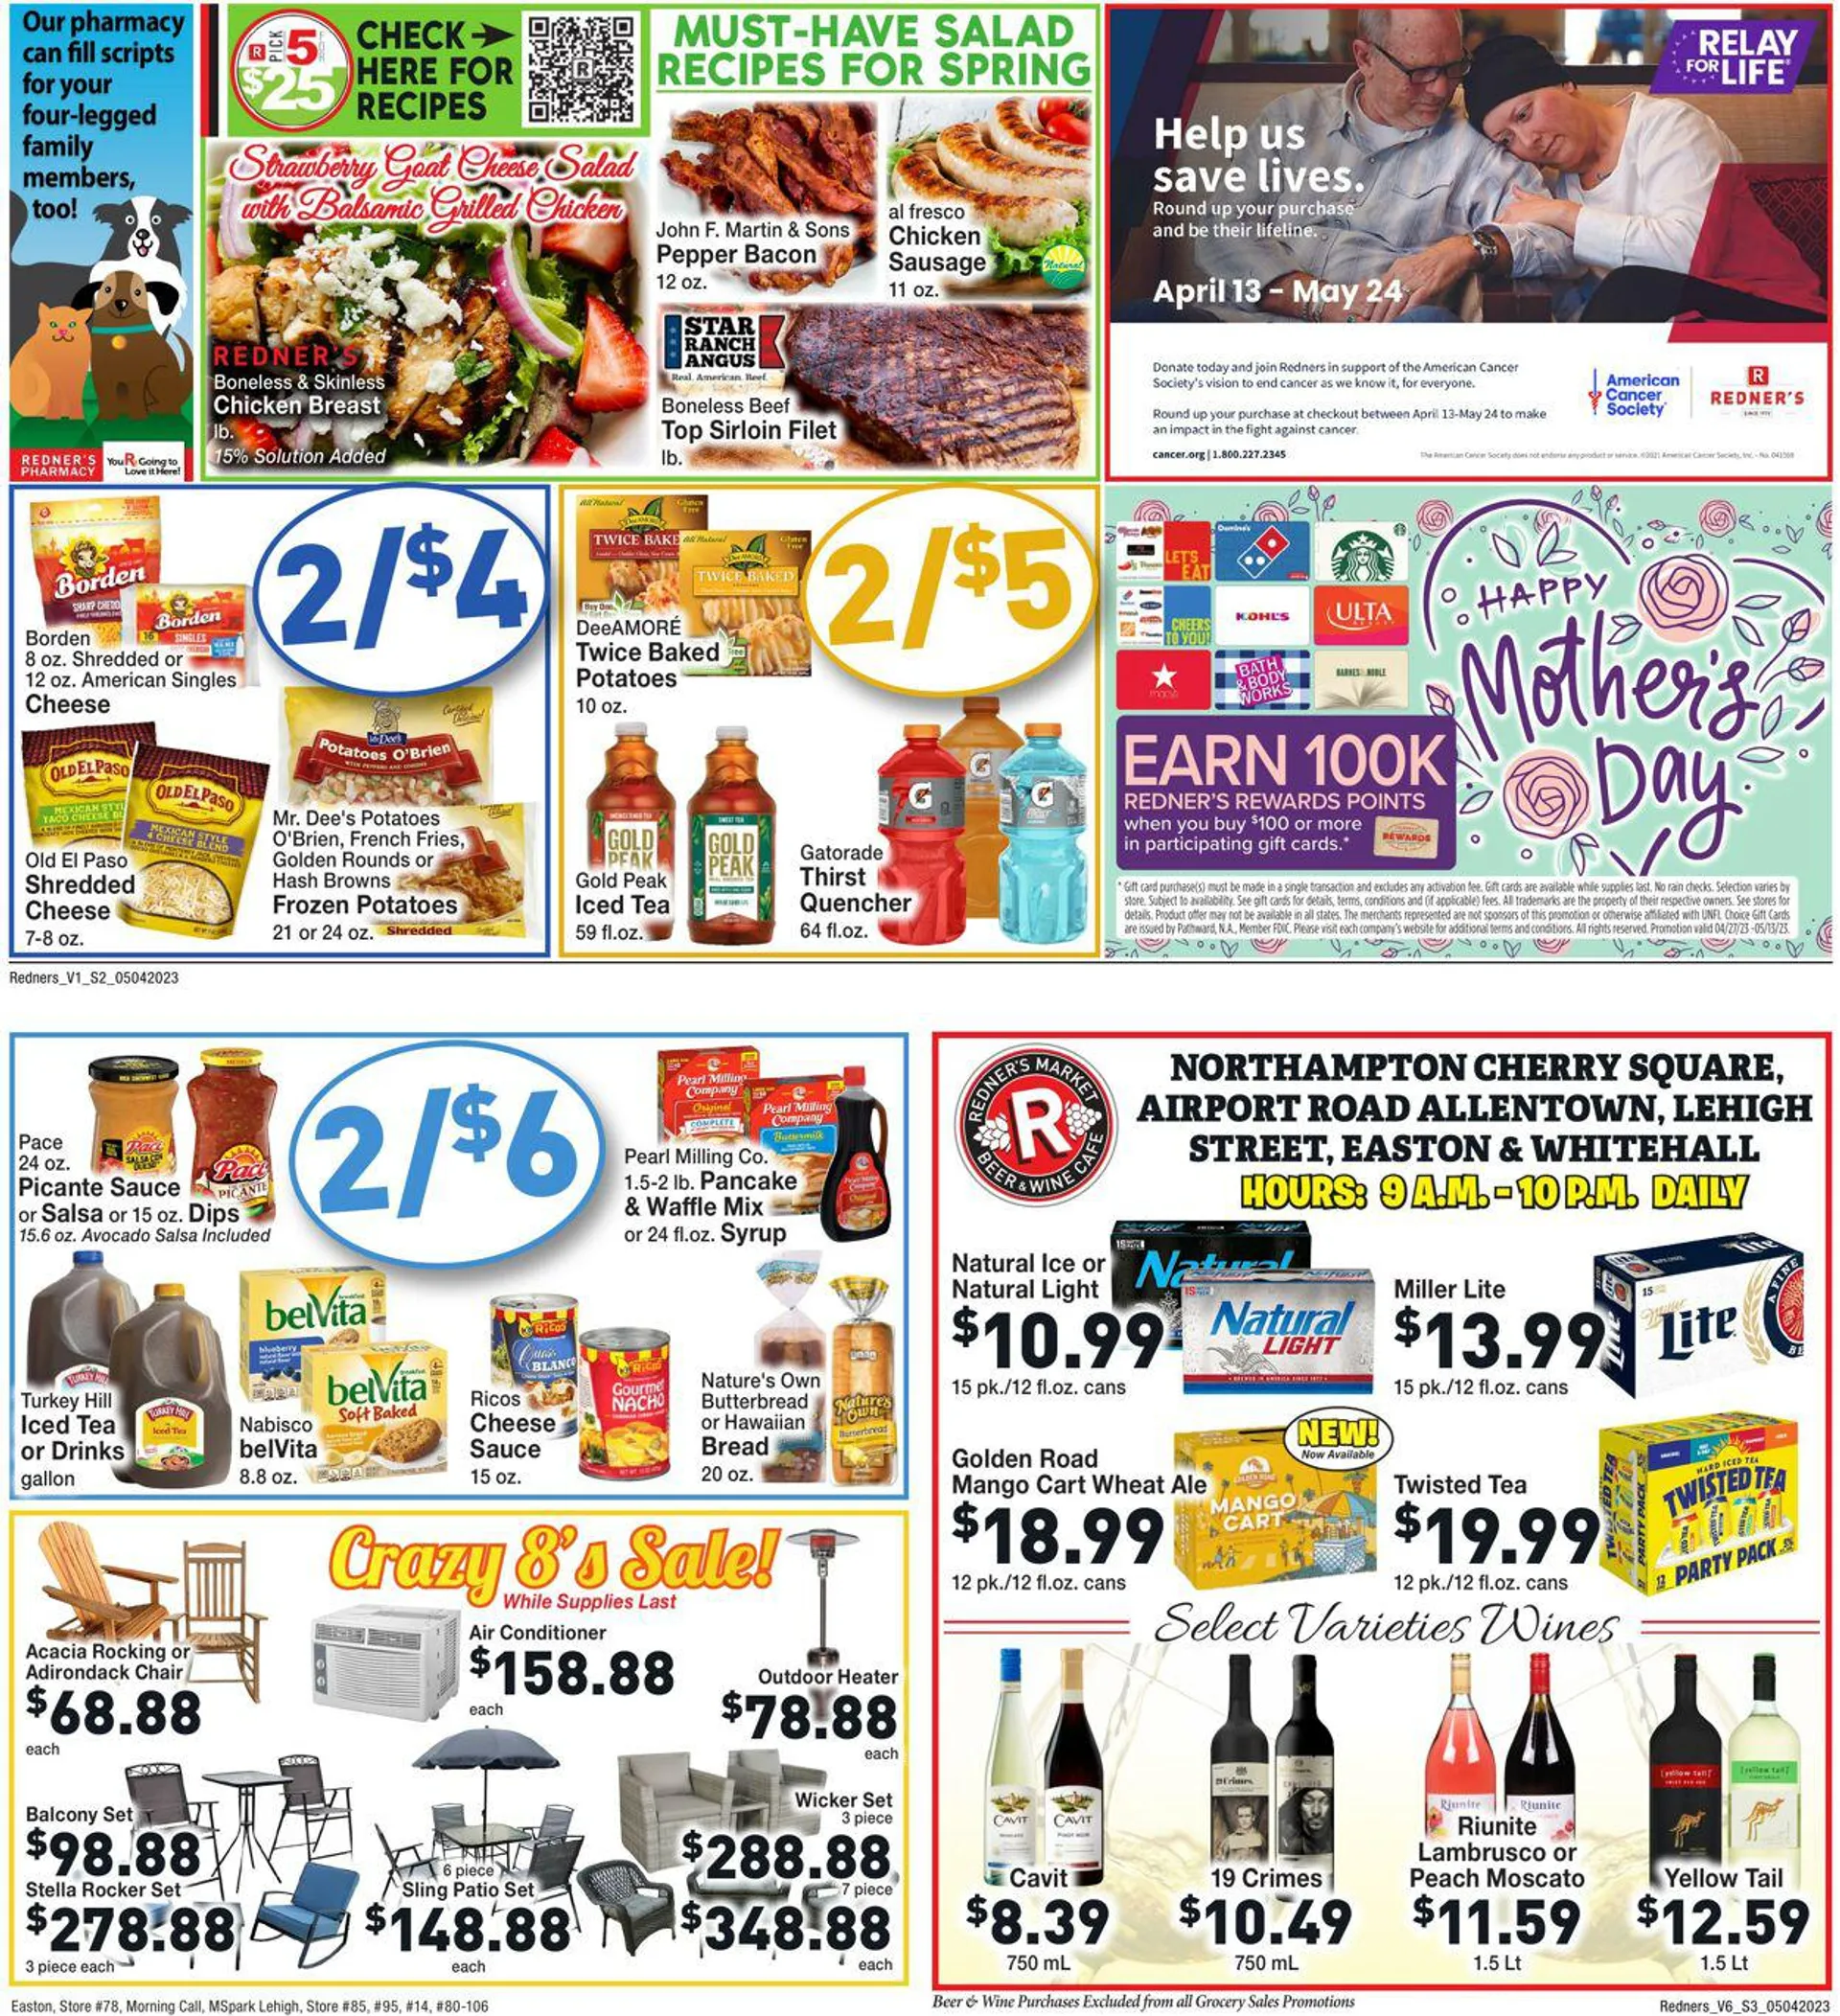 Redner’s Warehouse Market Current weekly ad - 3